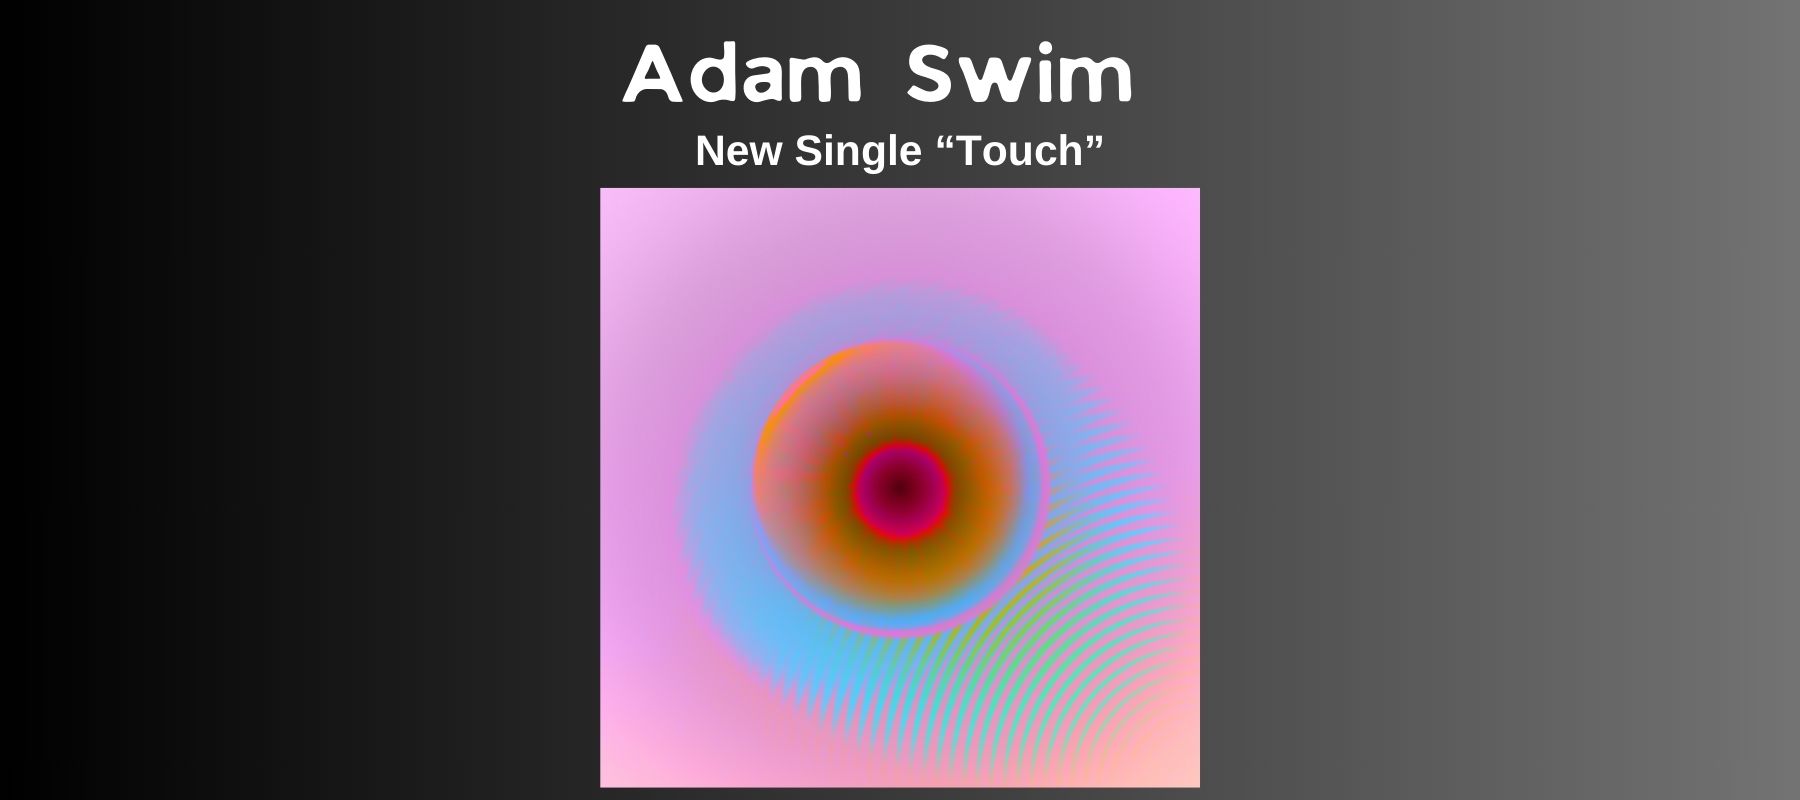 Adam Swim - New Single “Touch” lofi music house